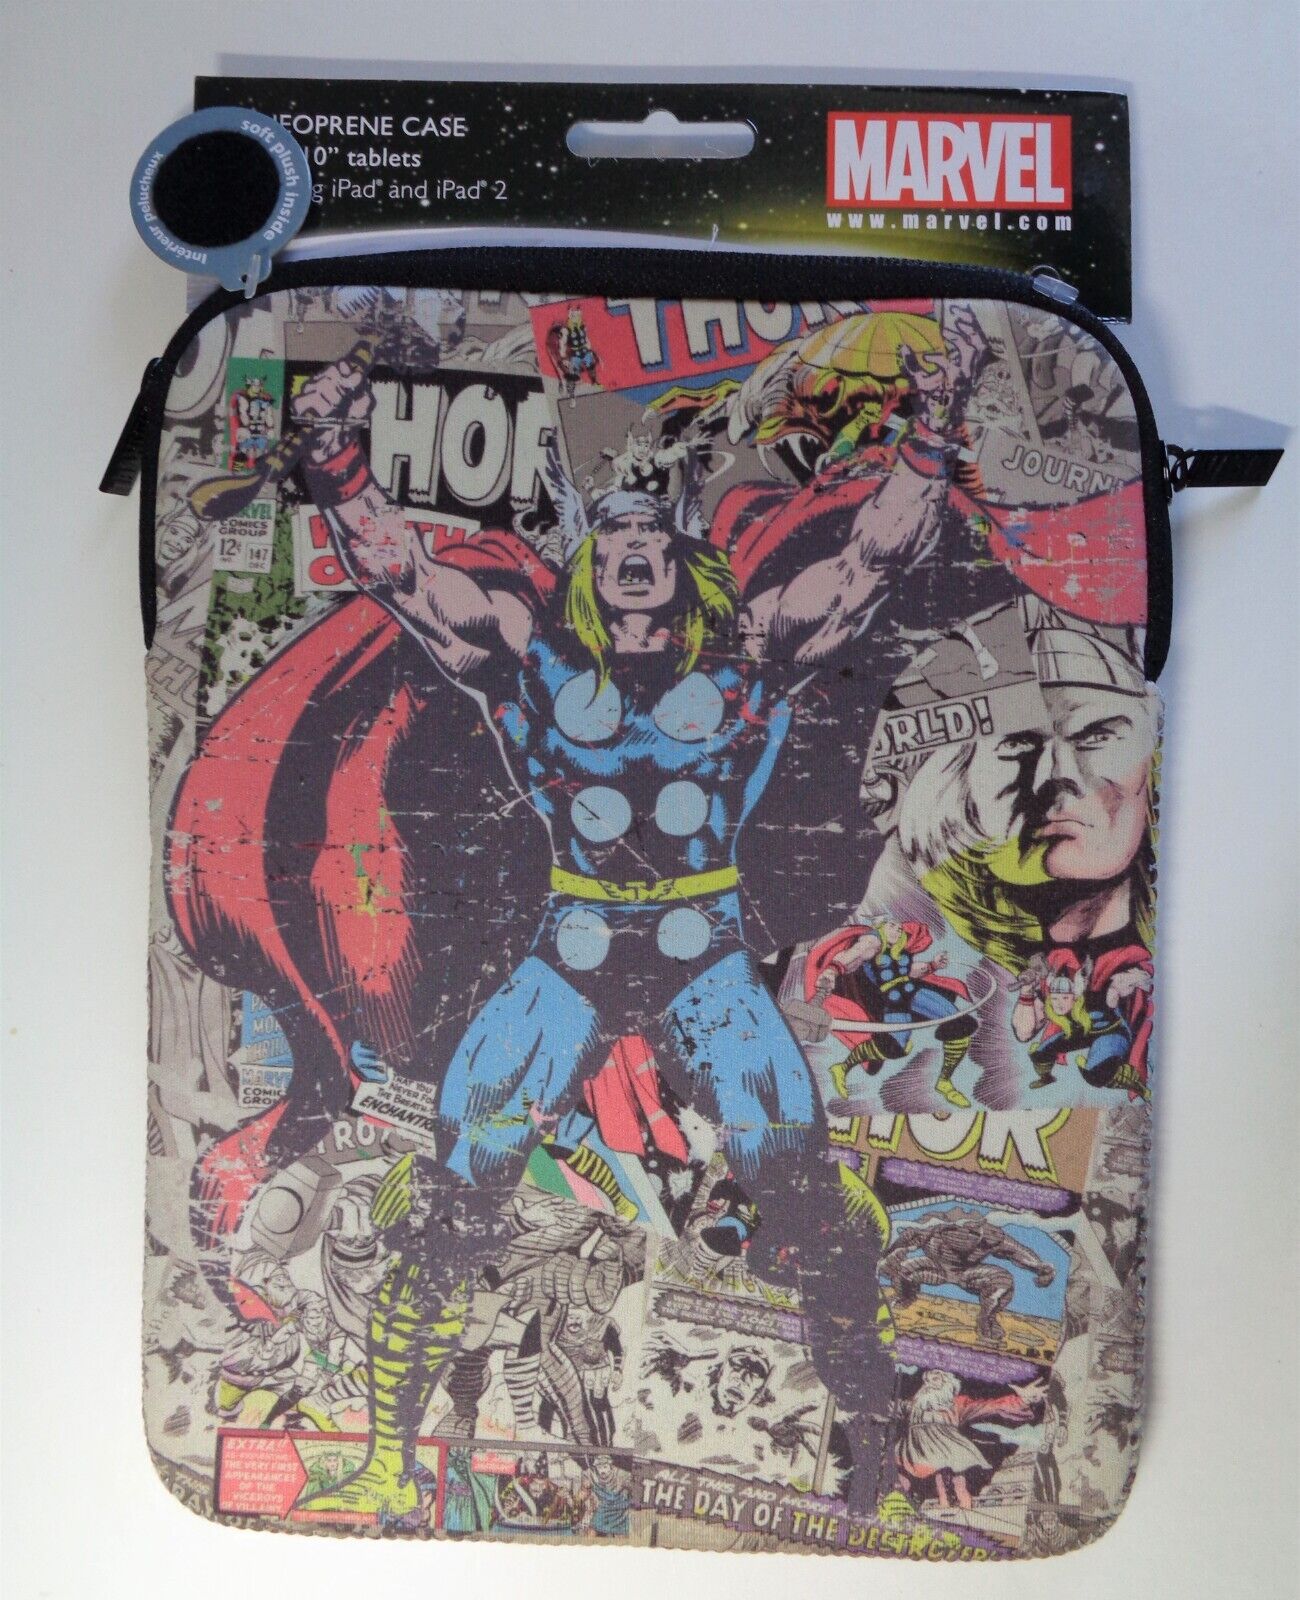 MARVEL Thor Neoprene Case 10” Tablets, Including Ipad-Ipad 2. Comic Book Print. 